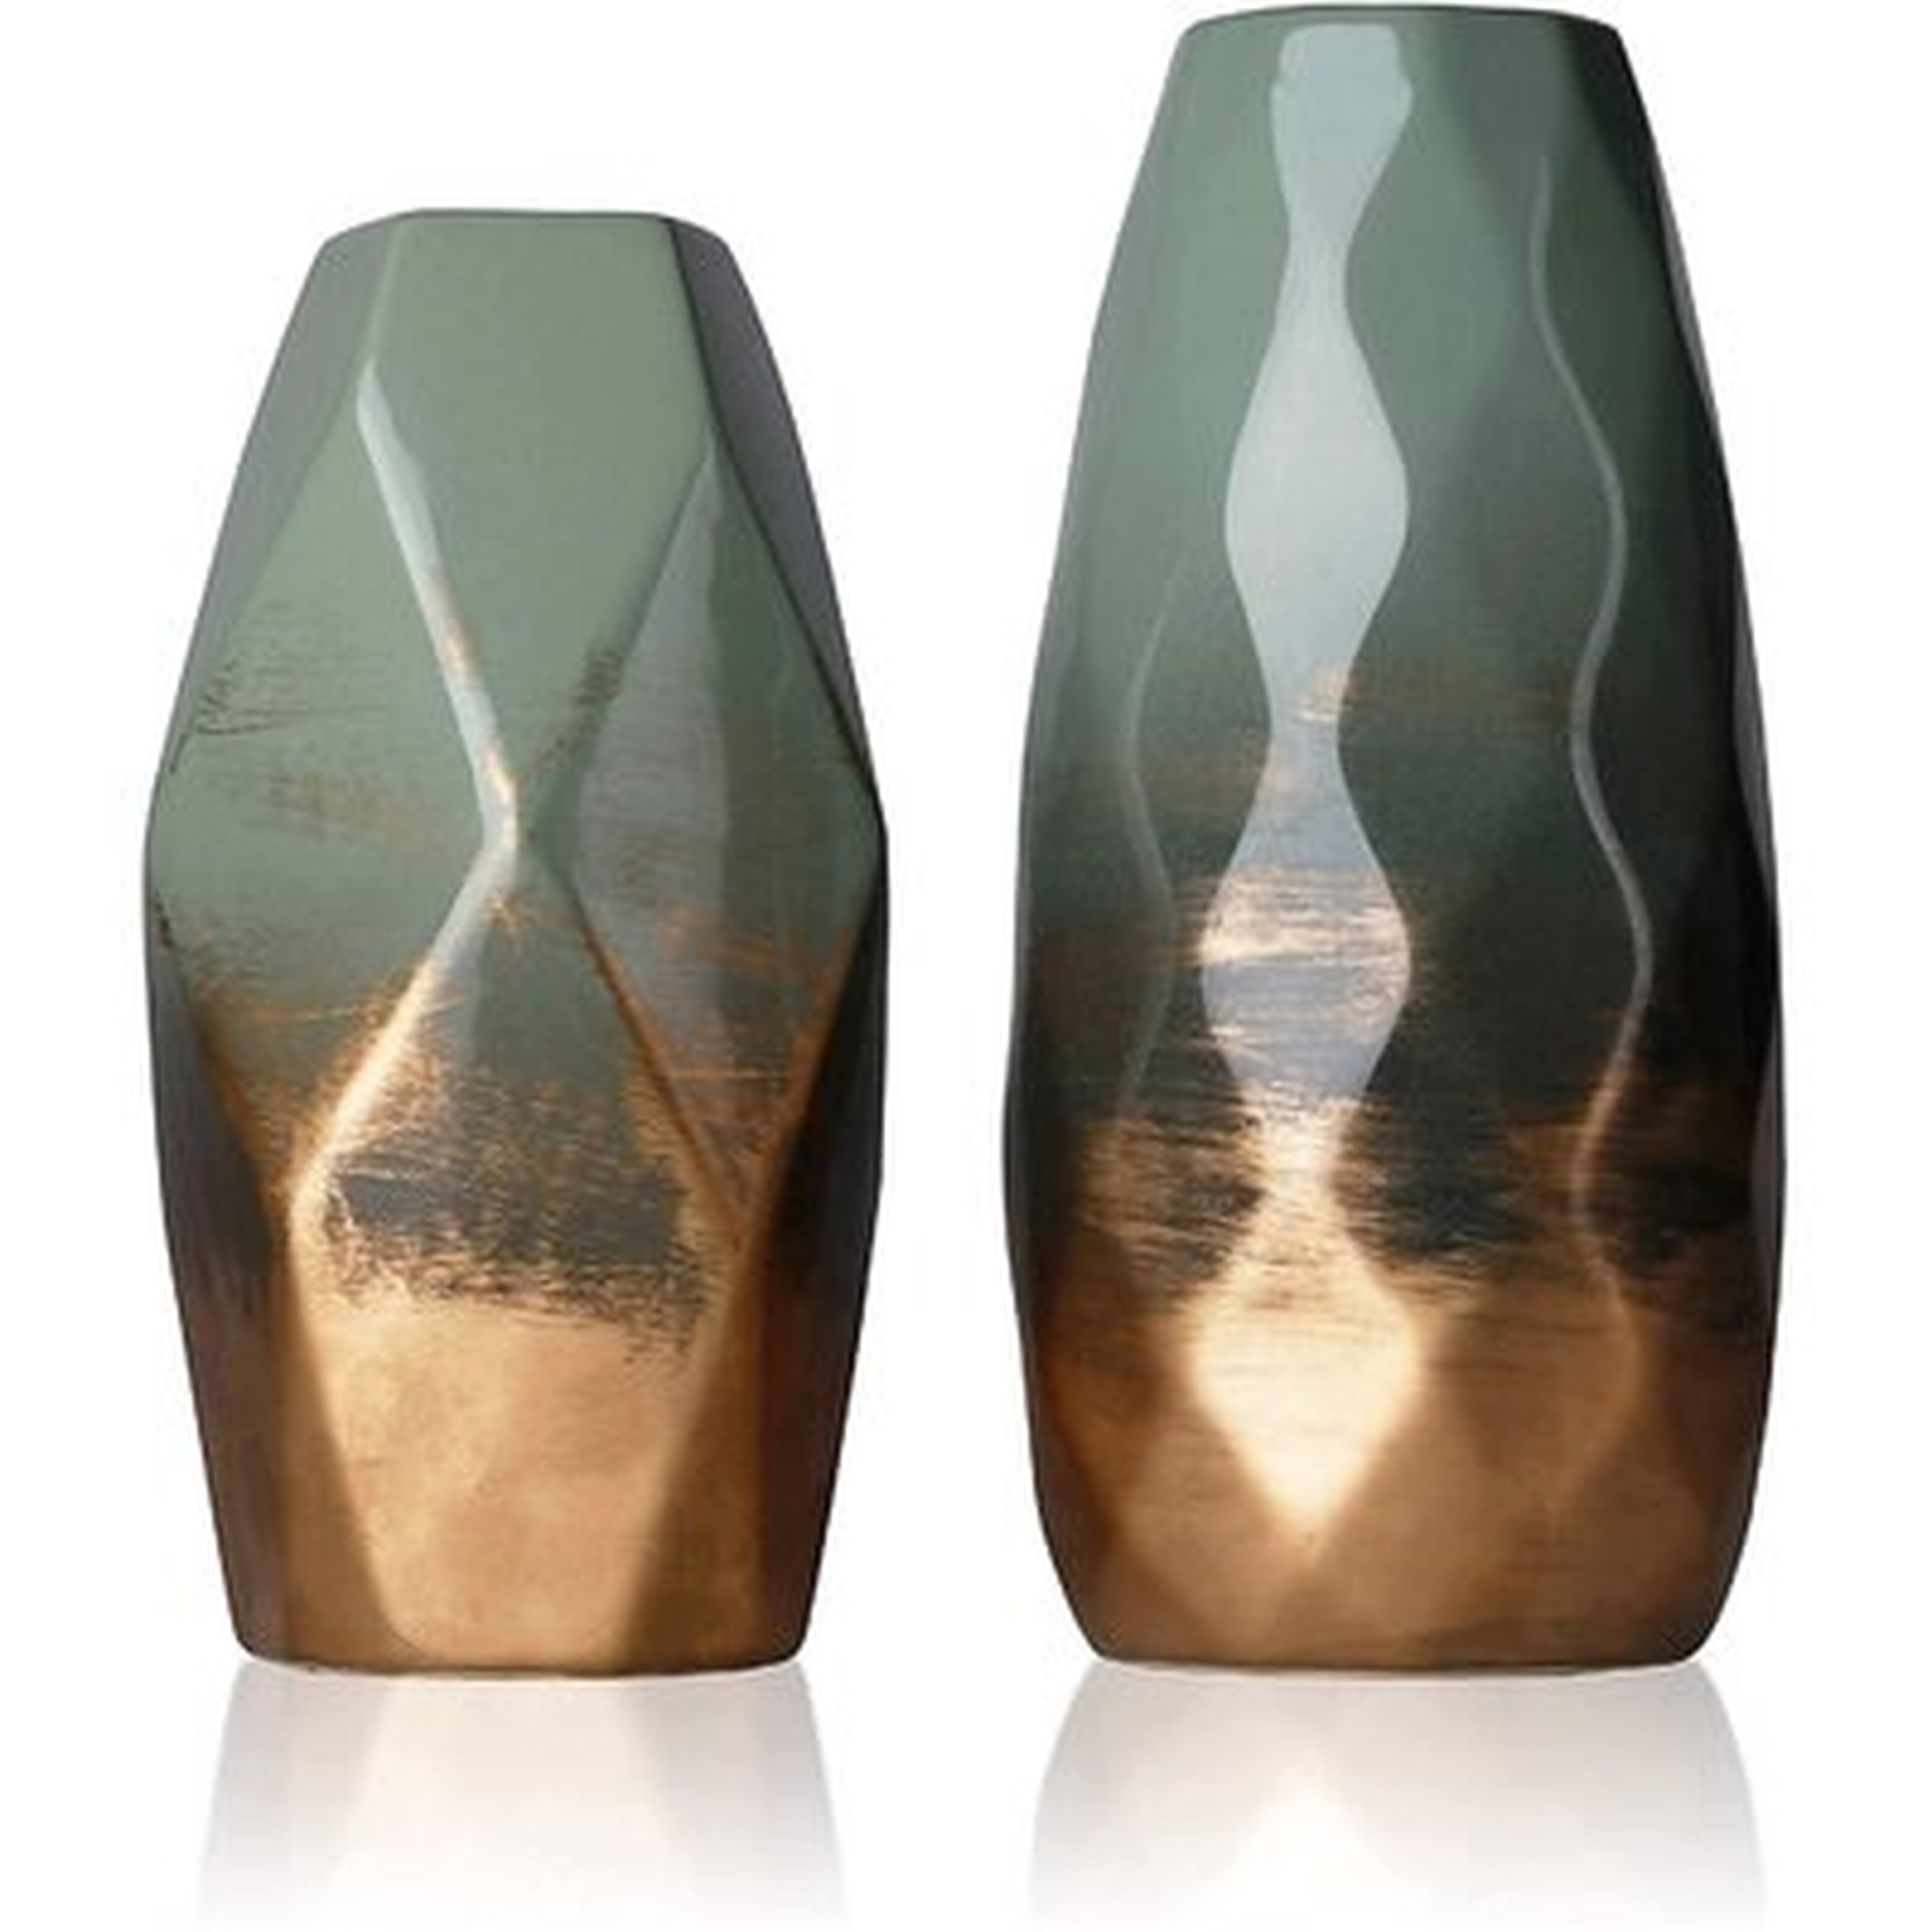 Modern Geometric Ceramic Vases Set Of 2, Green And Gold Vase For Home Decor, Decorative Vase For Living Room, Mantel, Table, Bedroom Decoration, - Wayfair